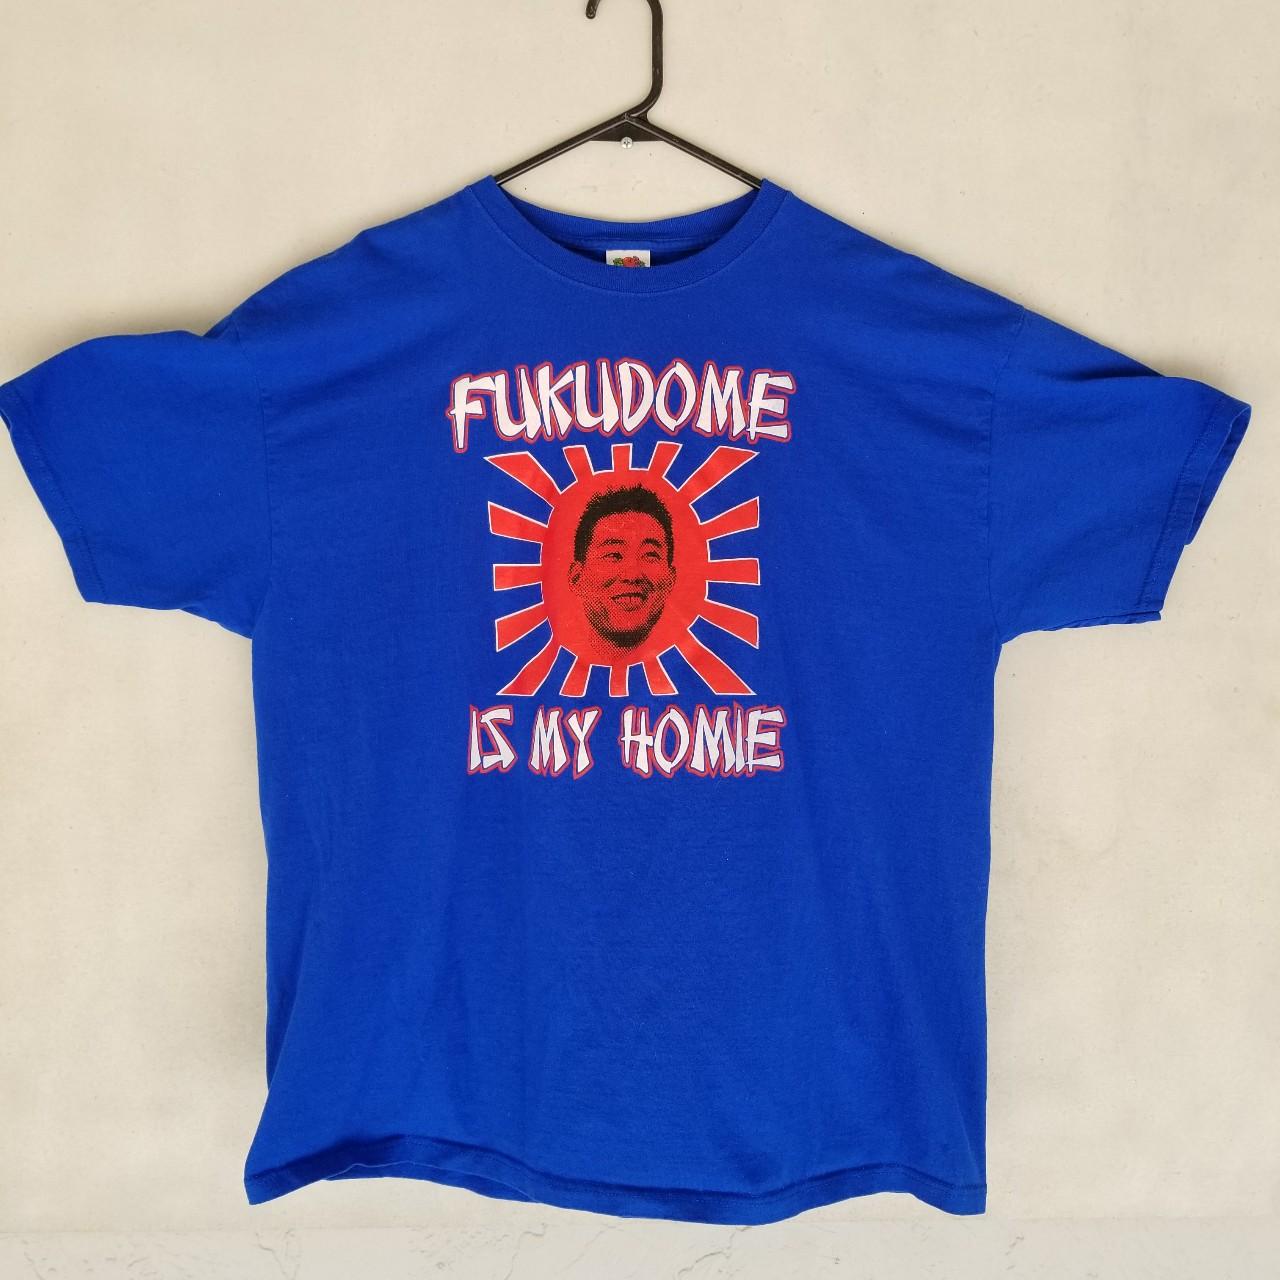 fukudome shirt